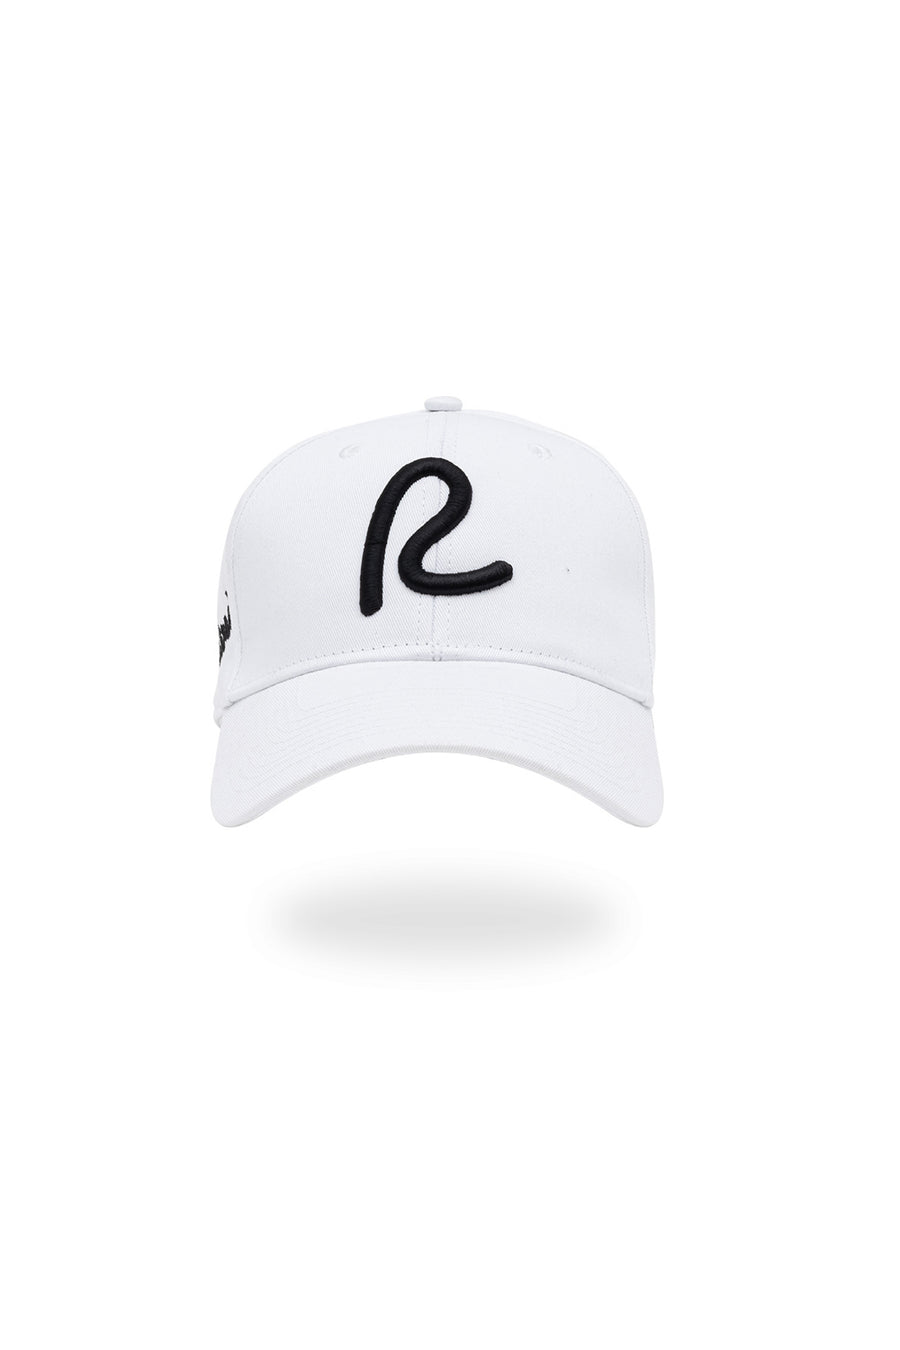 Rewired Classic Baseball Cap- White/ Black